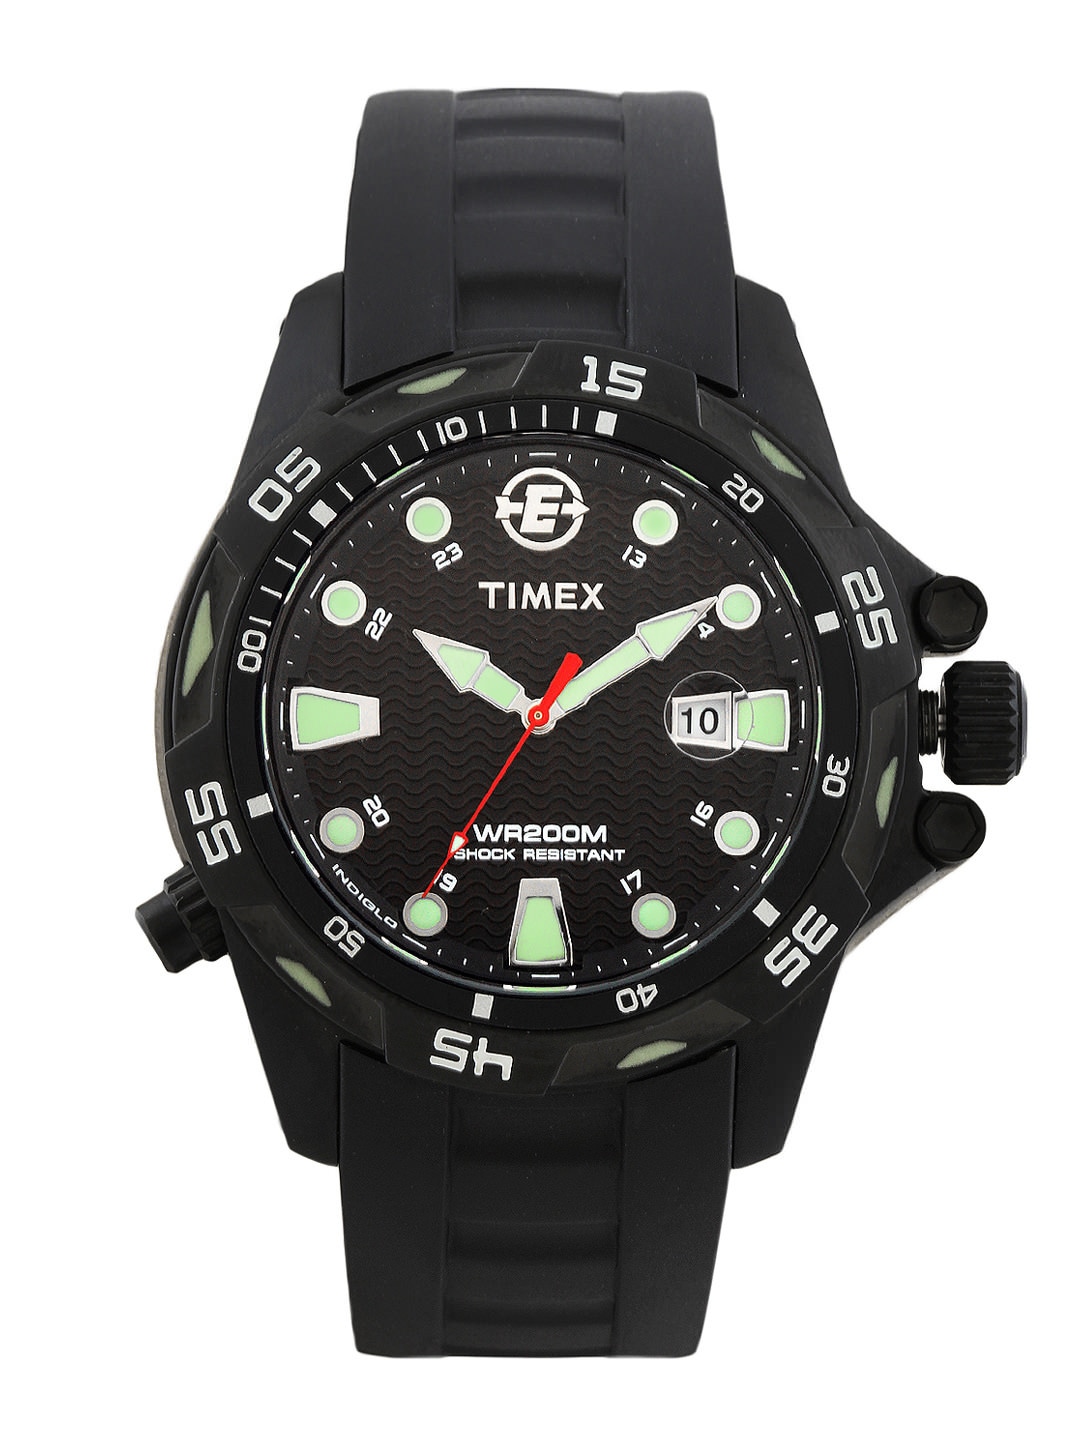 Timex Men Black Dial Watch T49618